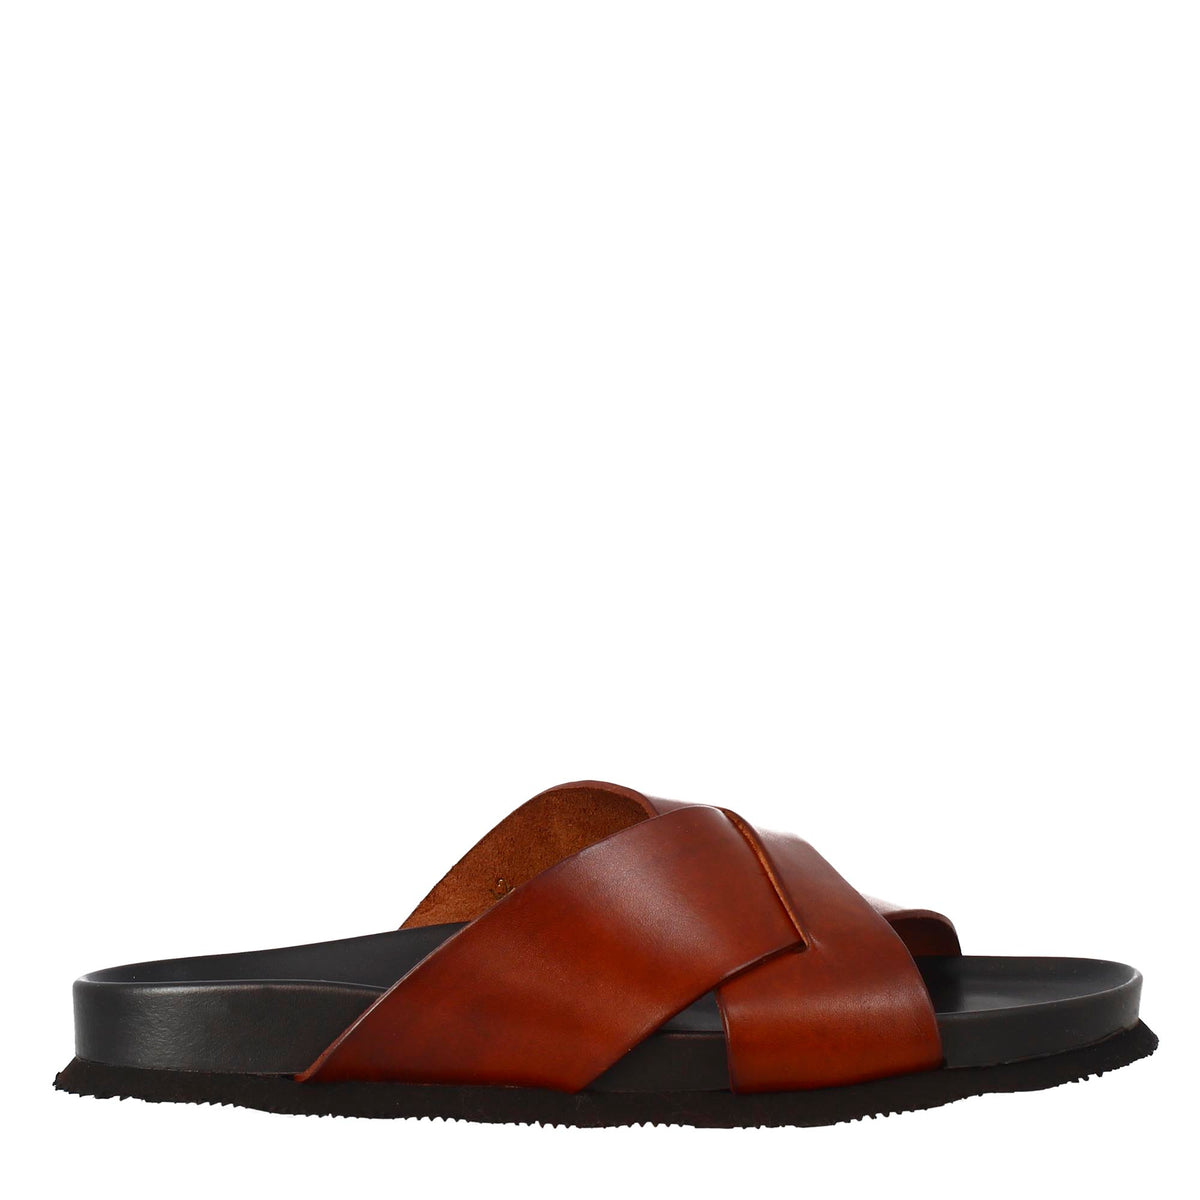 Open back brown leather men's sandals